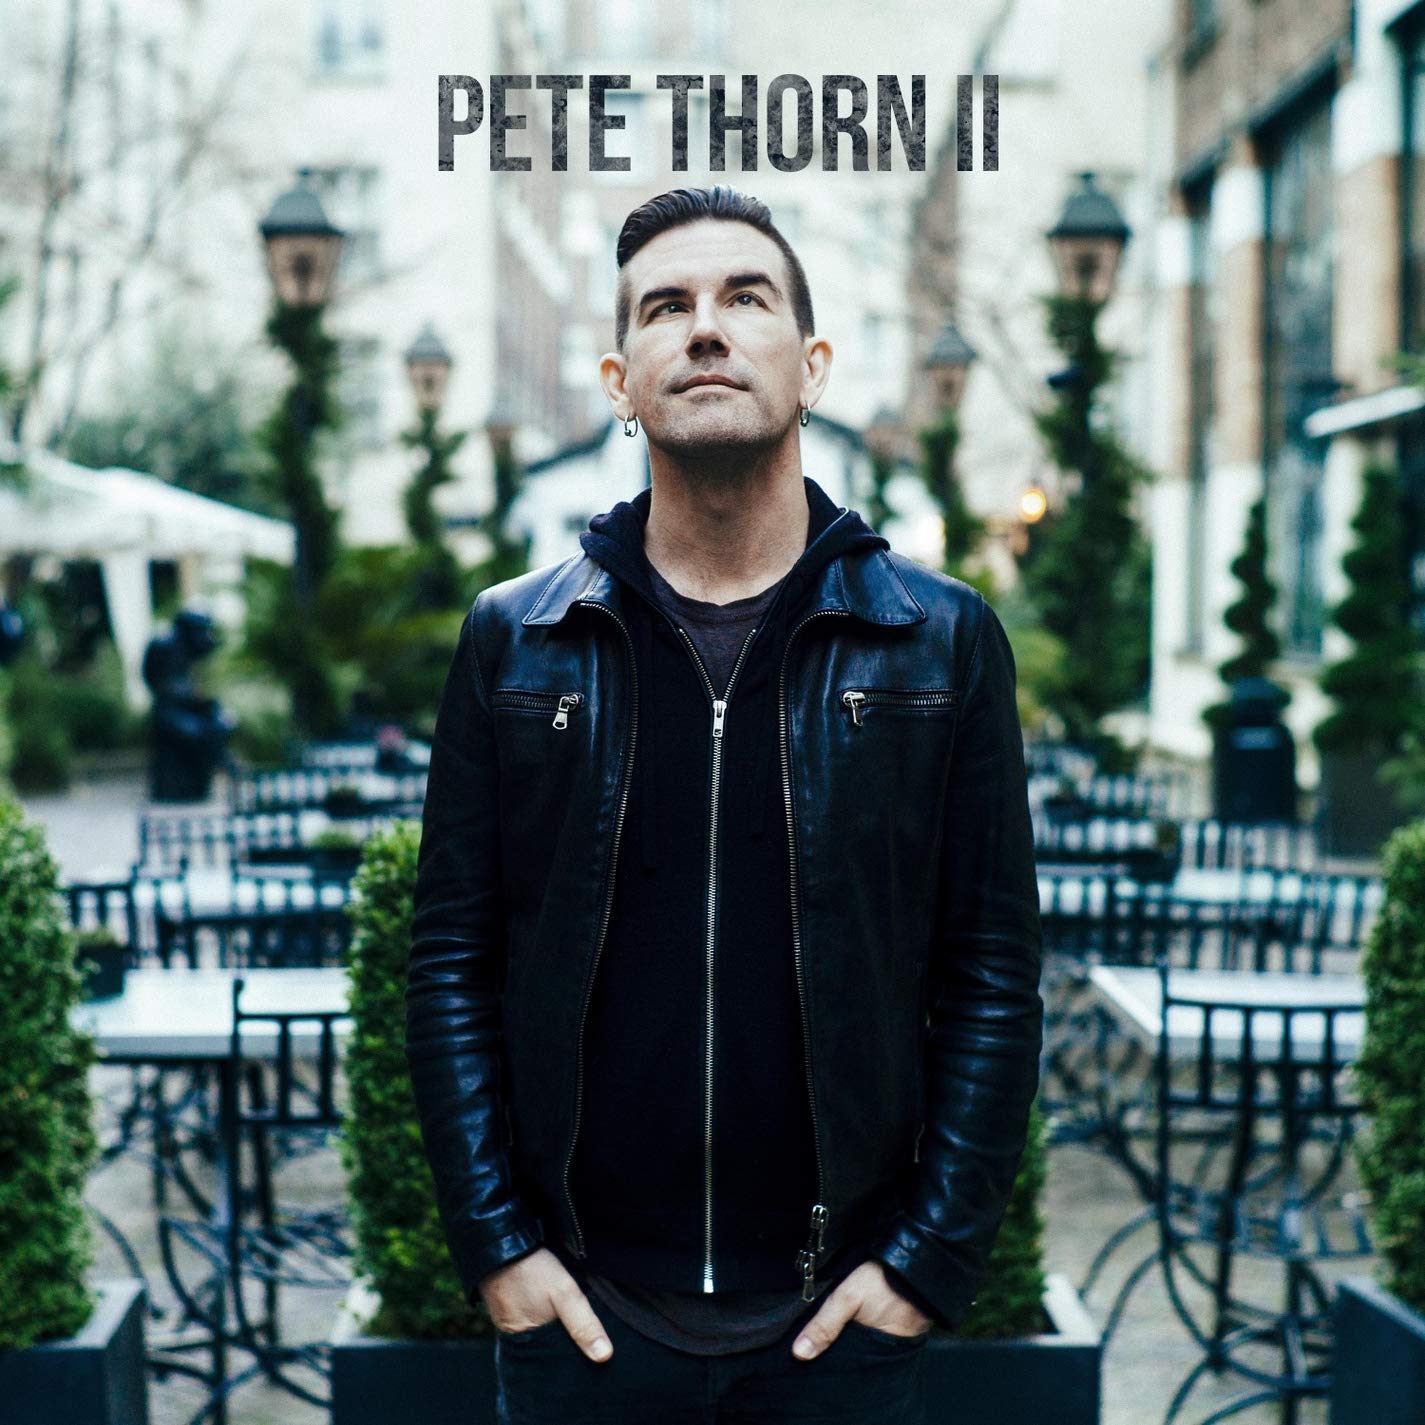 Pete Thorn CD SIGNED!!!! - HIENDGUITAR   HIENDGUITAR.COM PETE THORN